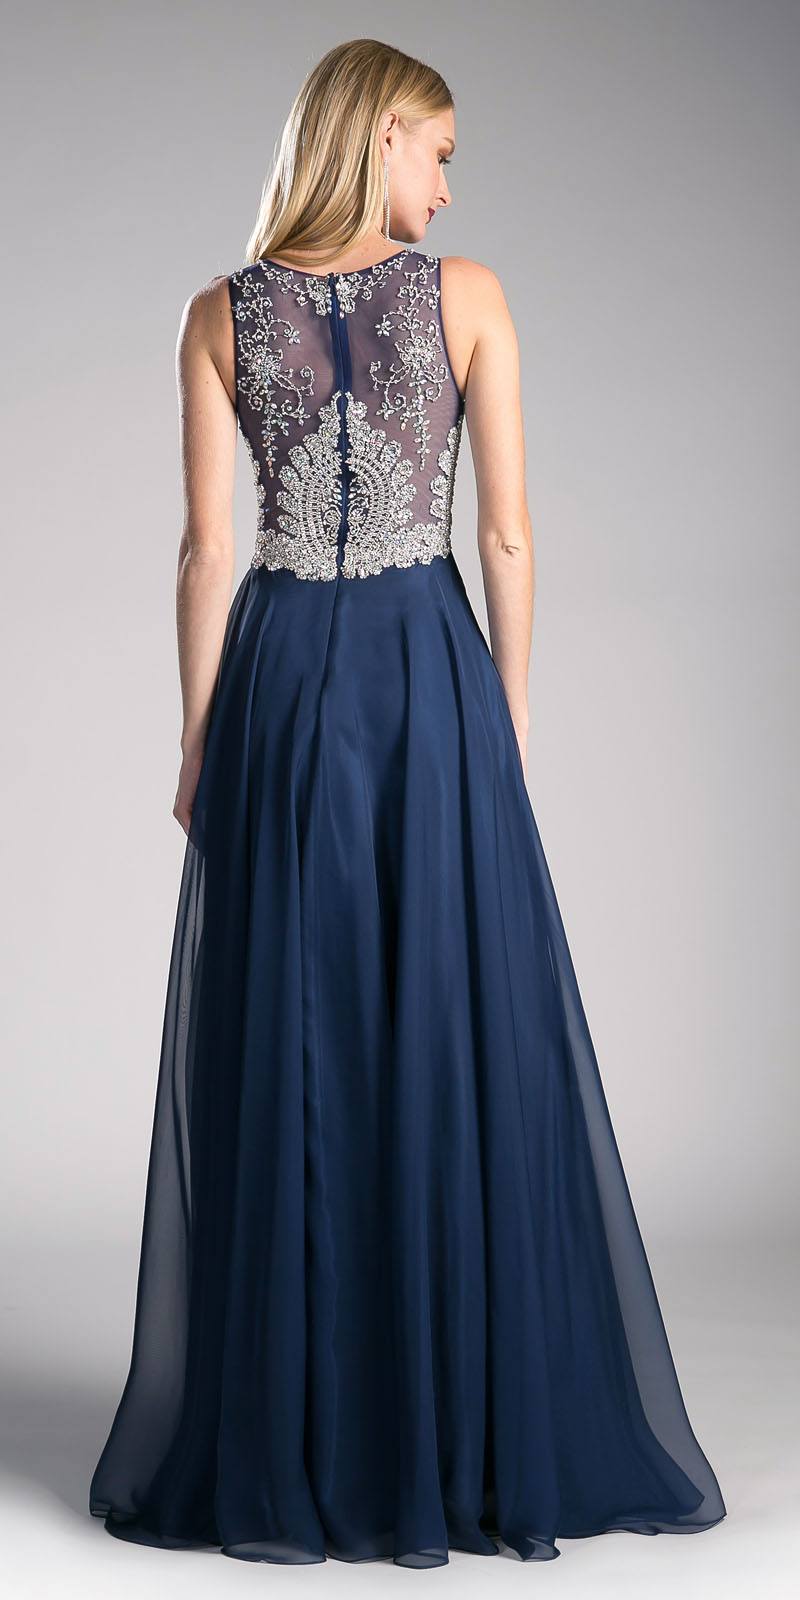 Cinderella Divine 56 Navy Blue Bateau Illusion Neckline Embellished Bodice Sleeveless Prom Gown Back View